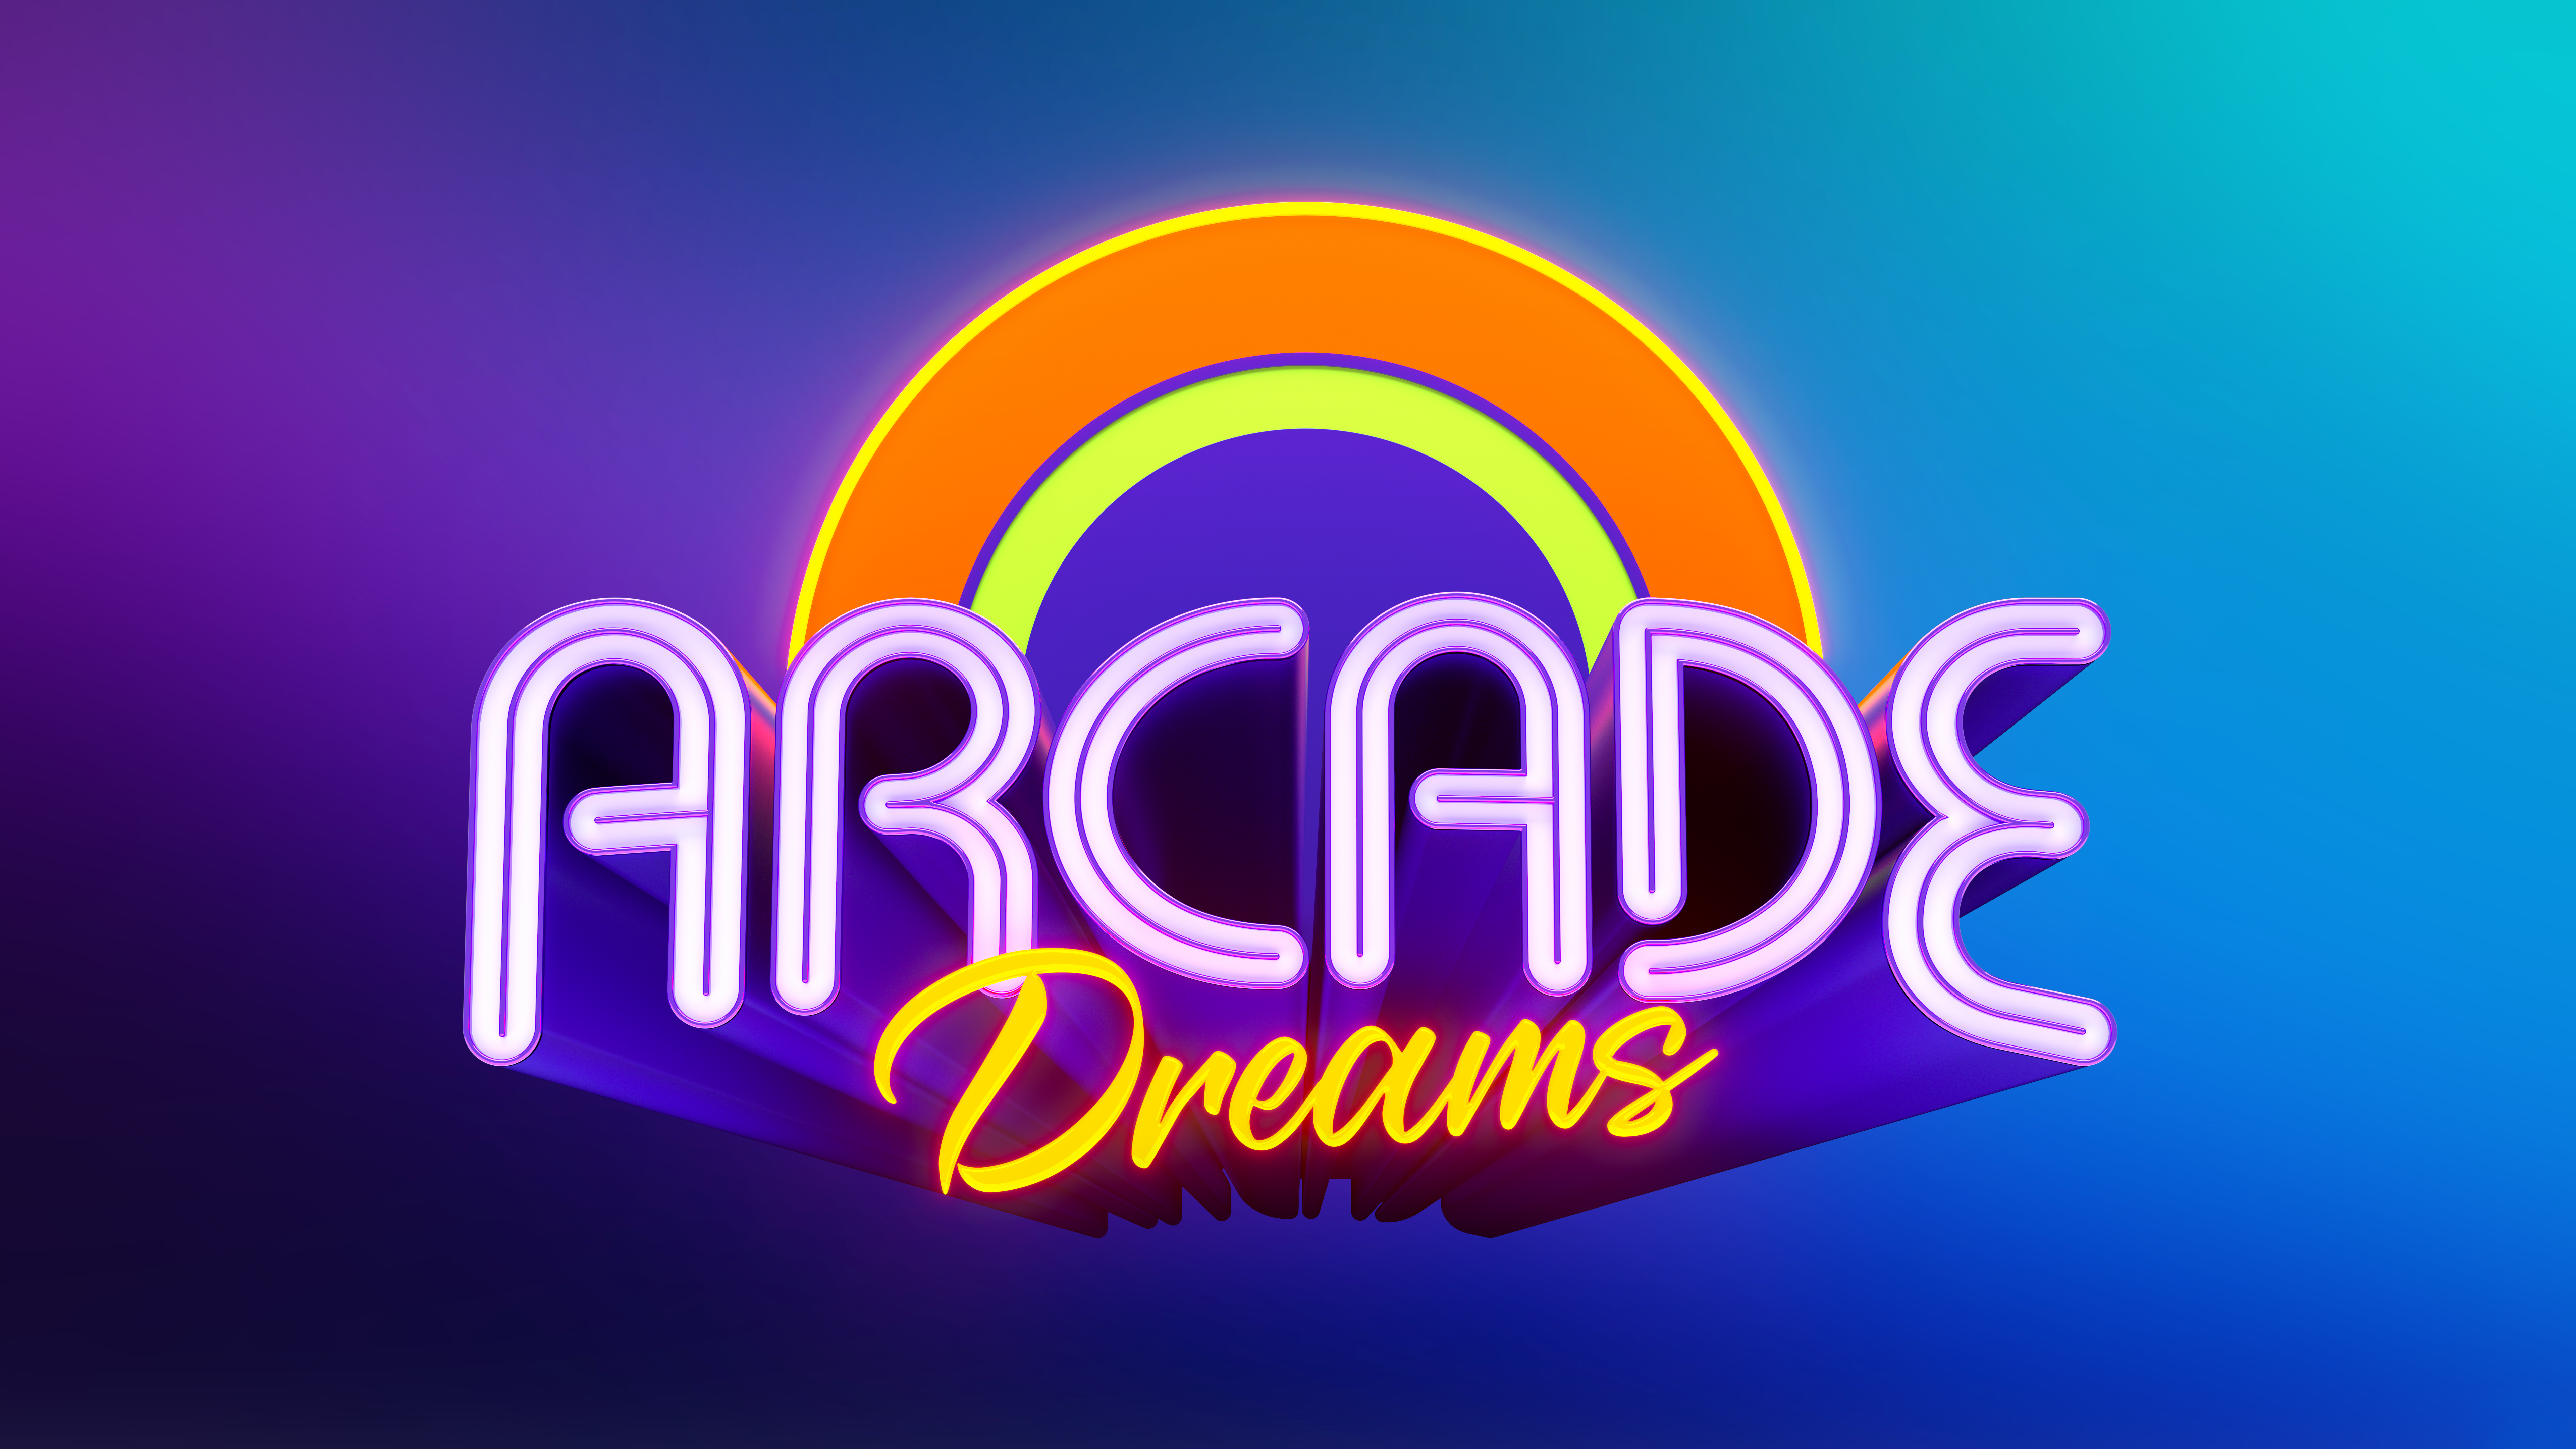 Arcade Dreams Documentary Coming To Kickstarter